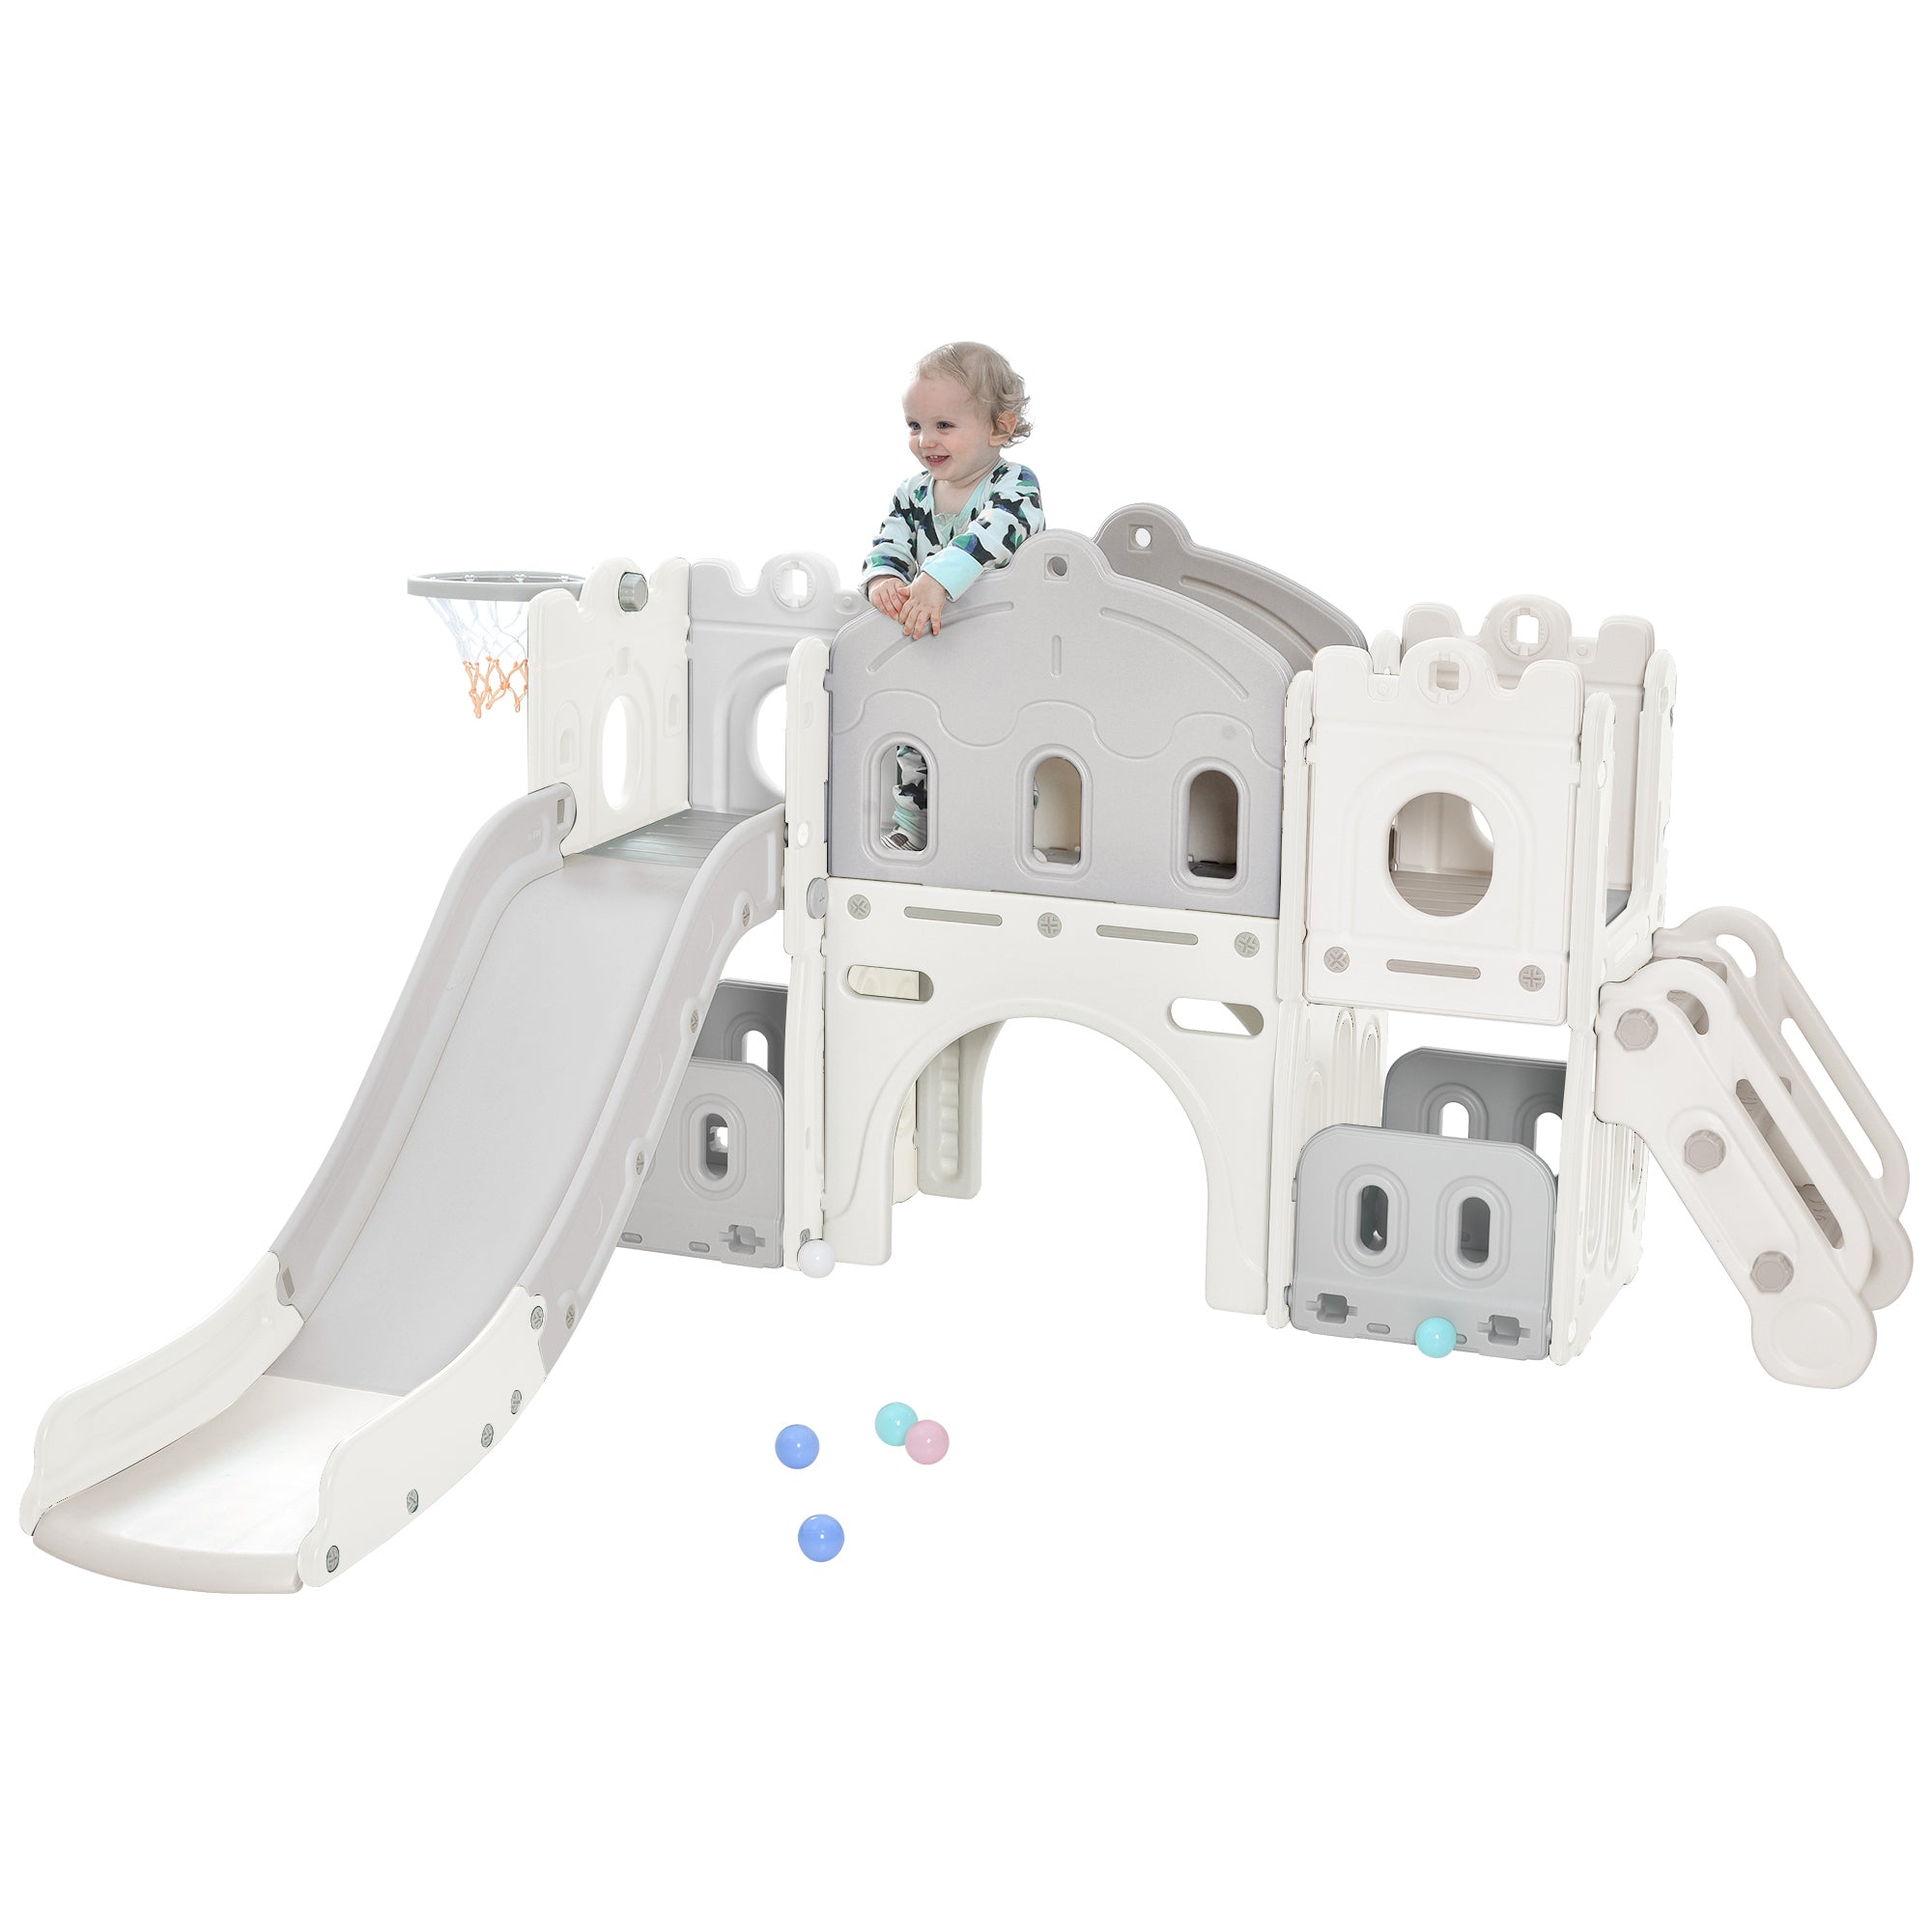 Kids Slide Playset Structure (White)